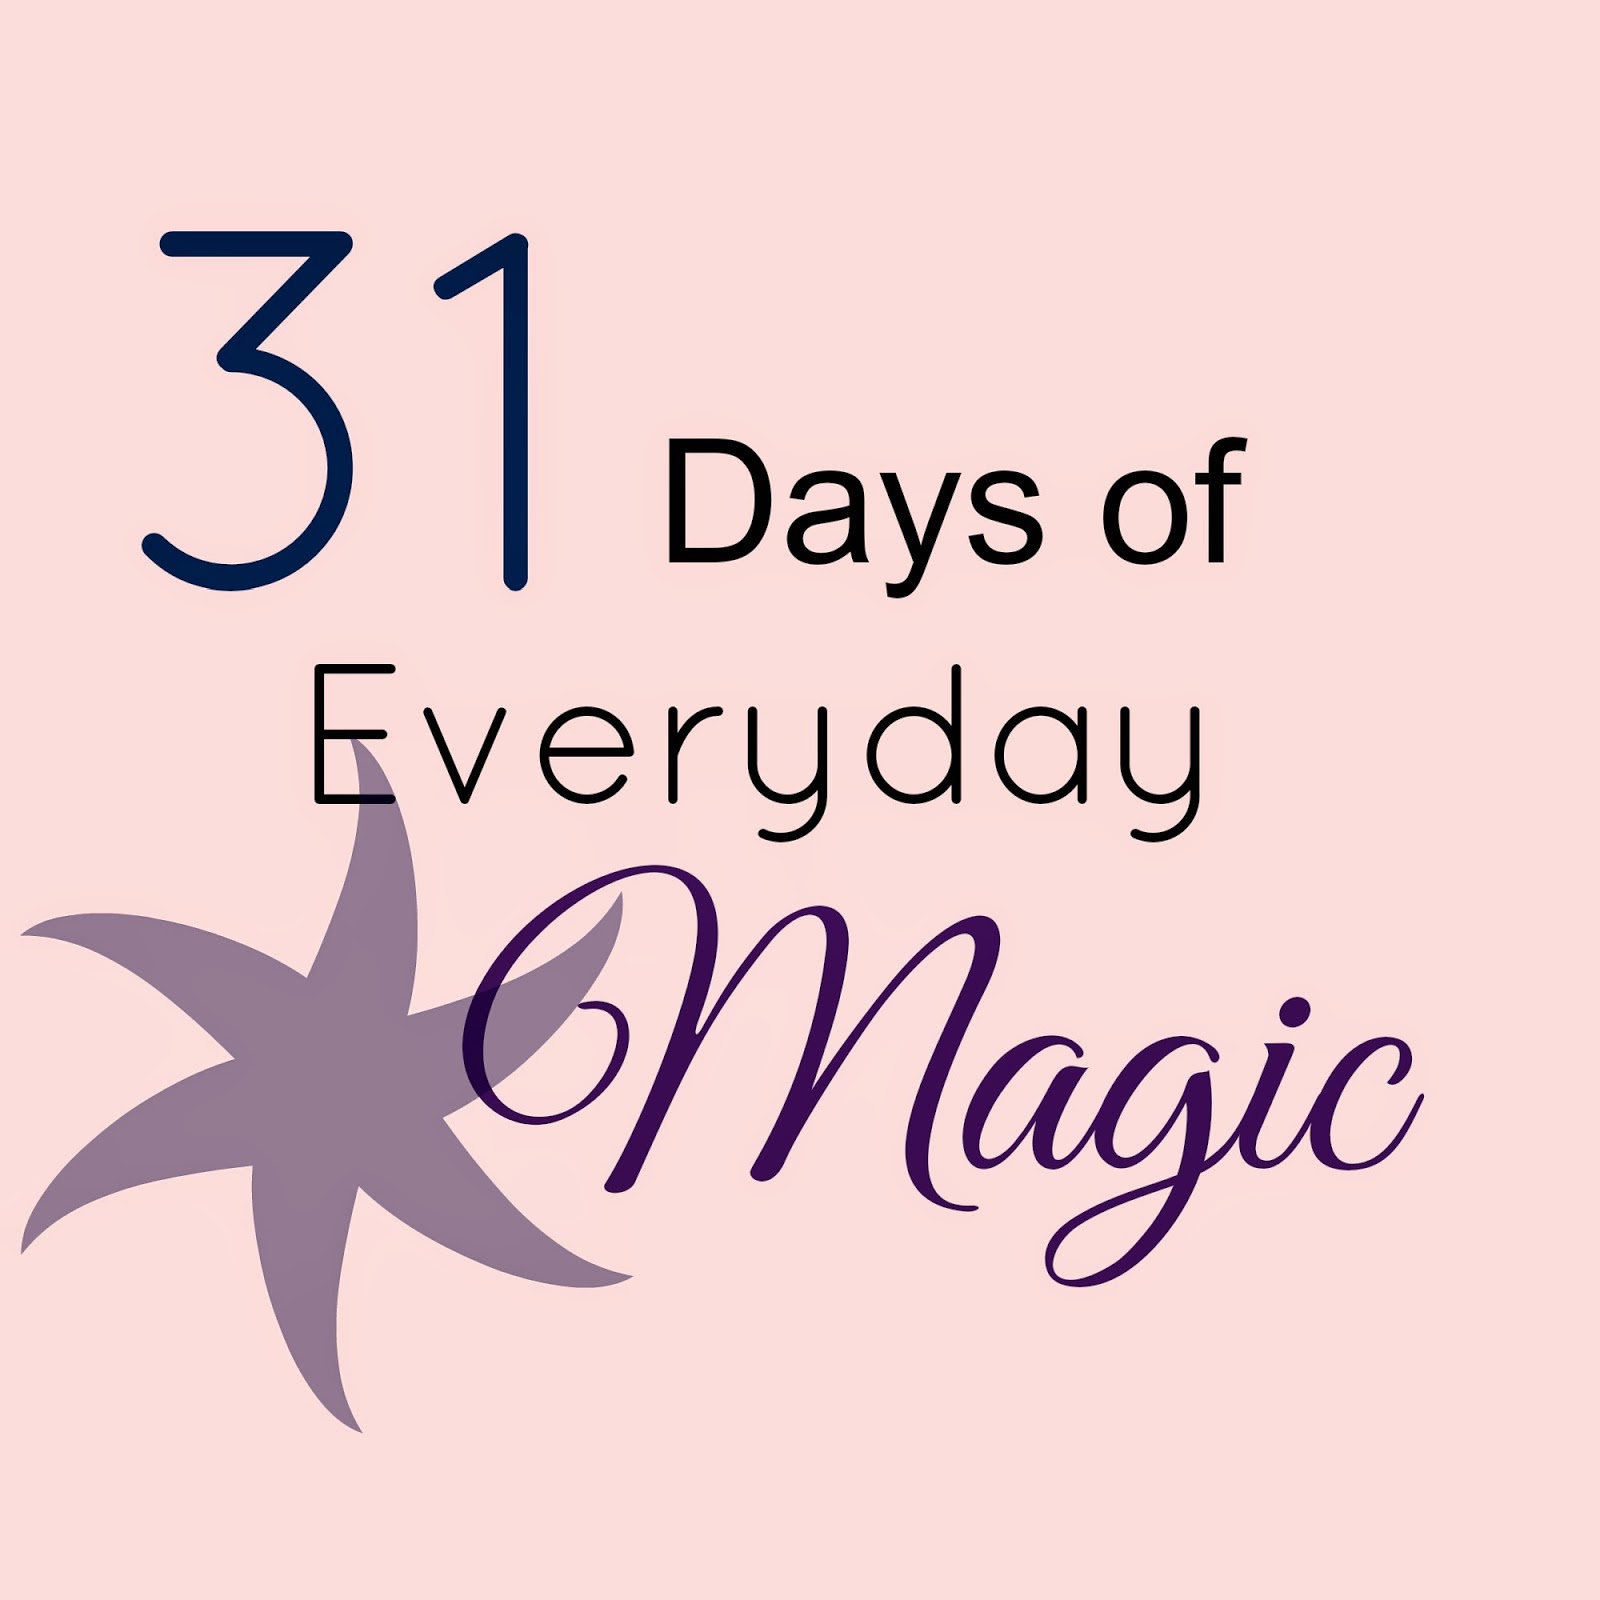 http://www.bestillaminute.com/p/31-days-of-everyday-magic.html